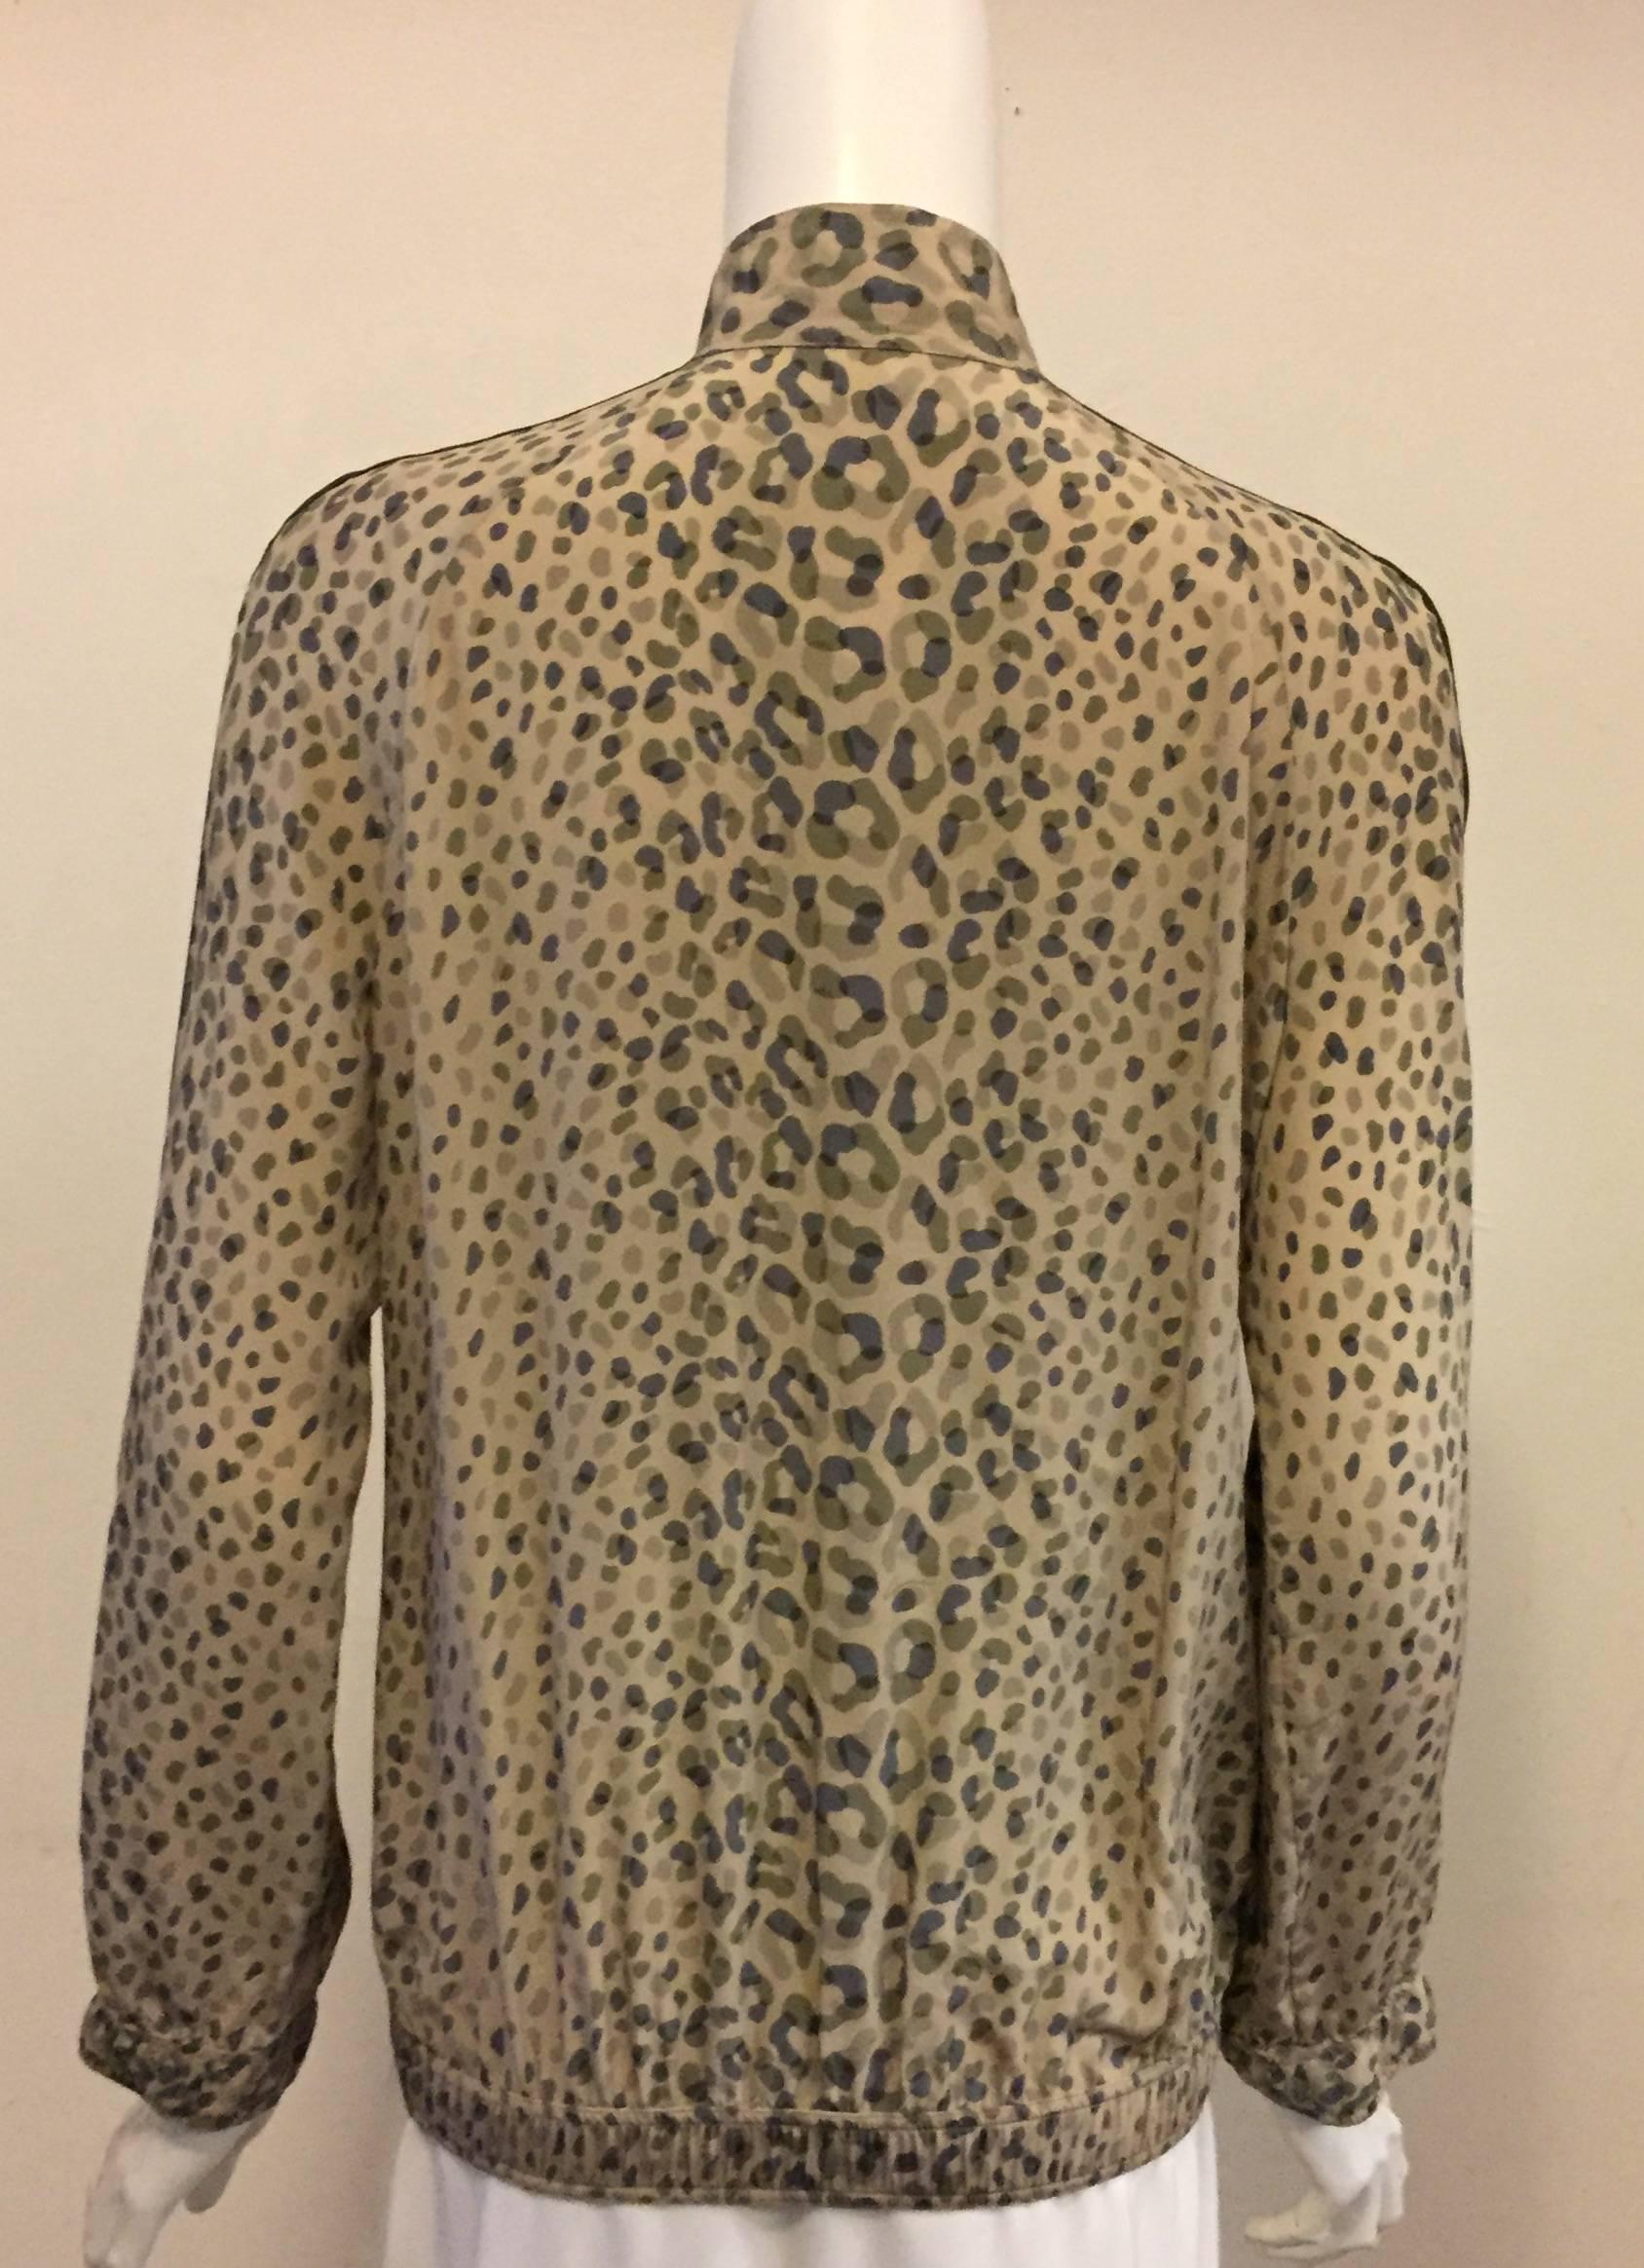 gucci leopard jacket